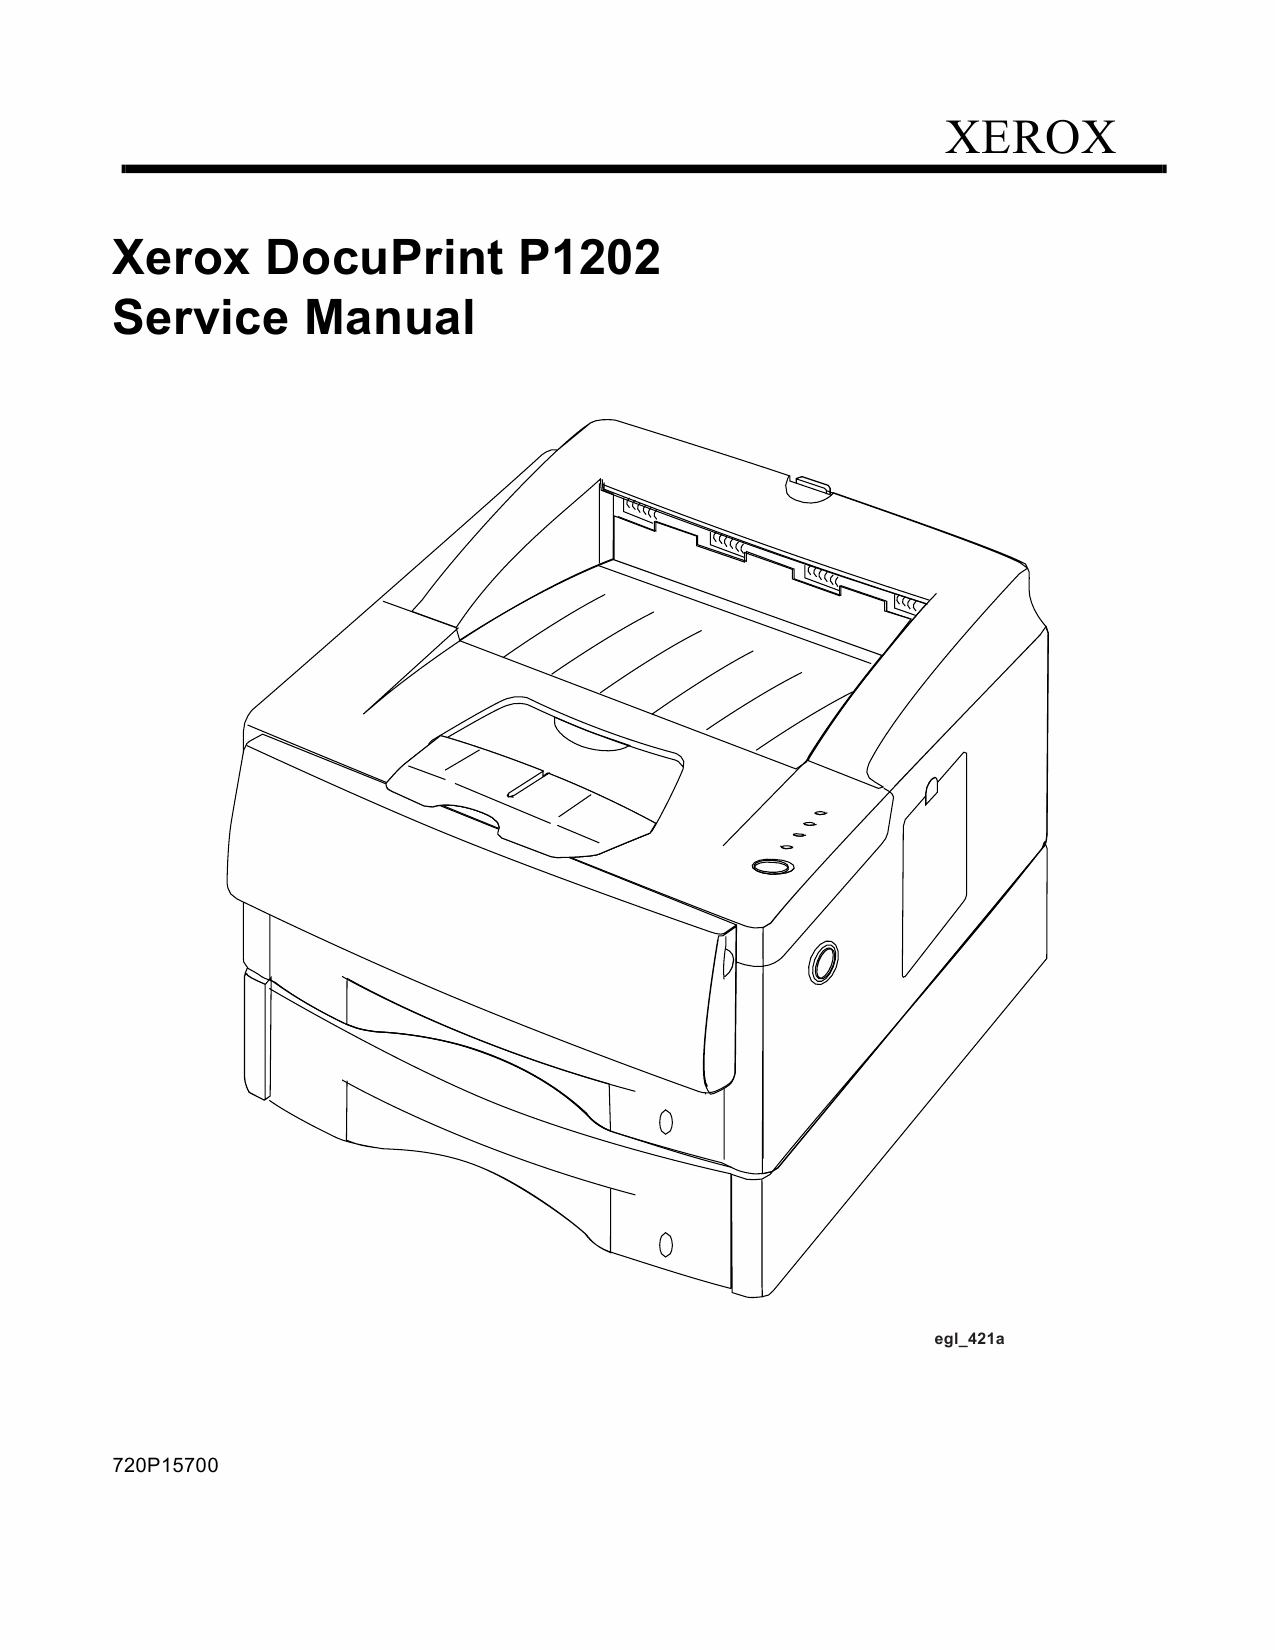 Xerox DocuPrint P1202 Parts List and Service Manual-1